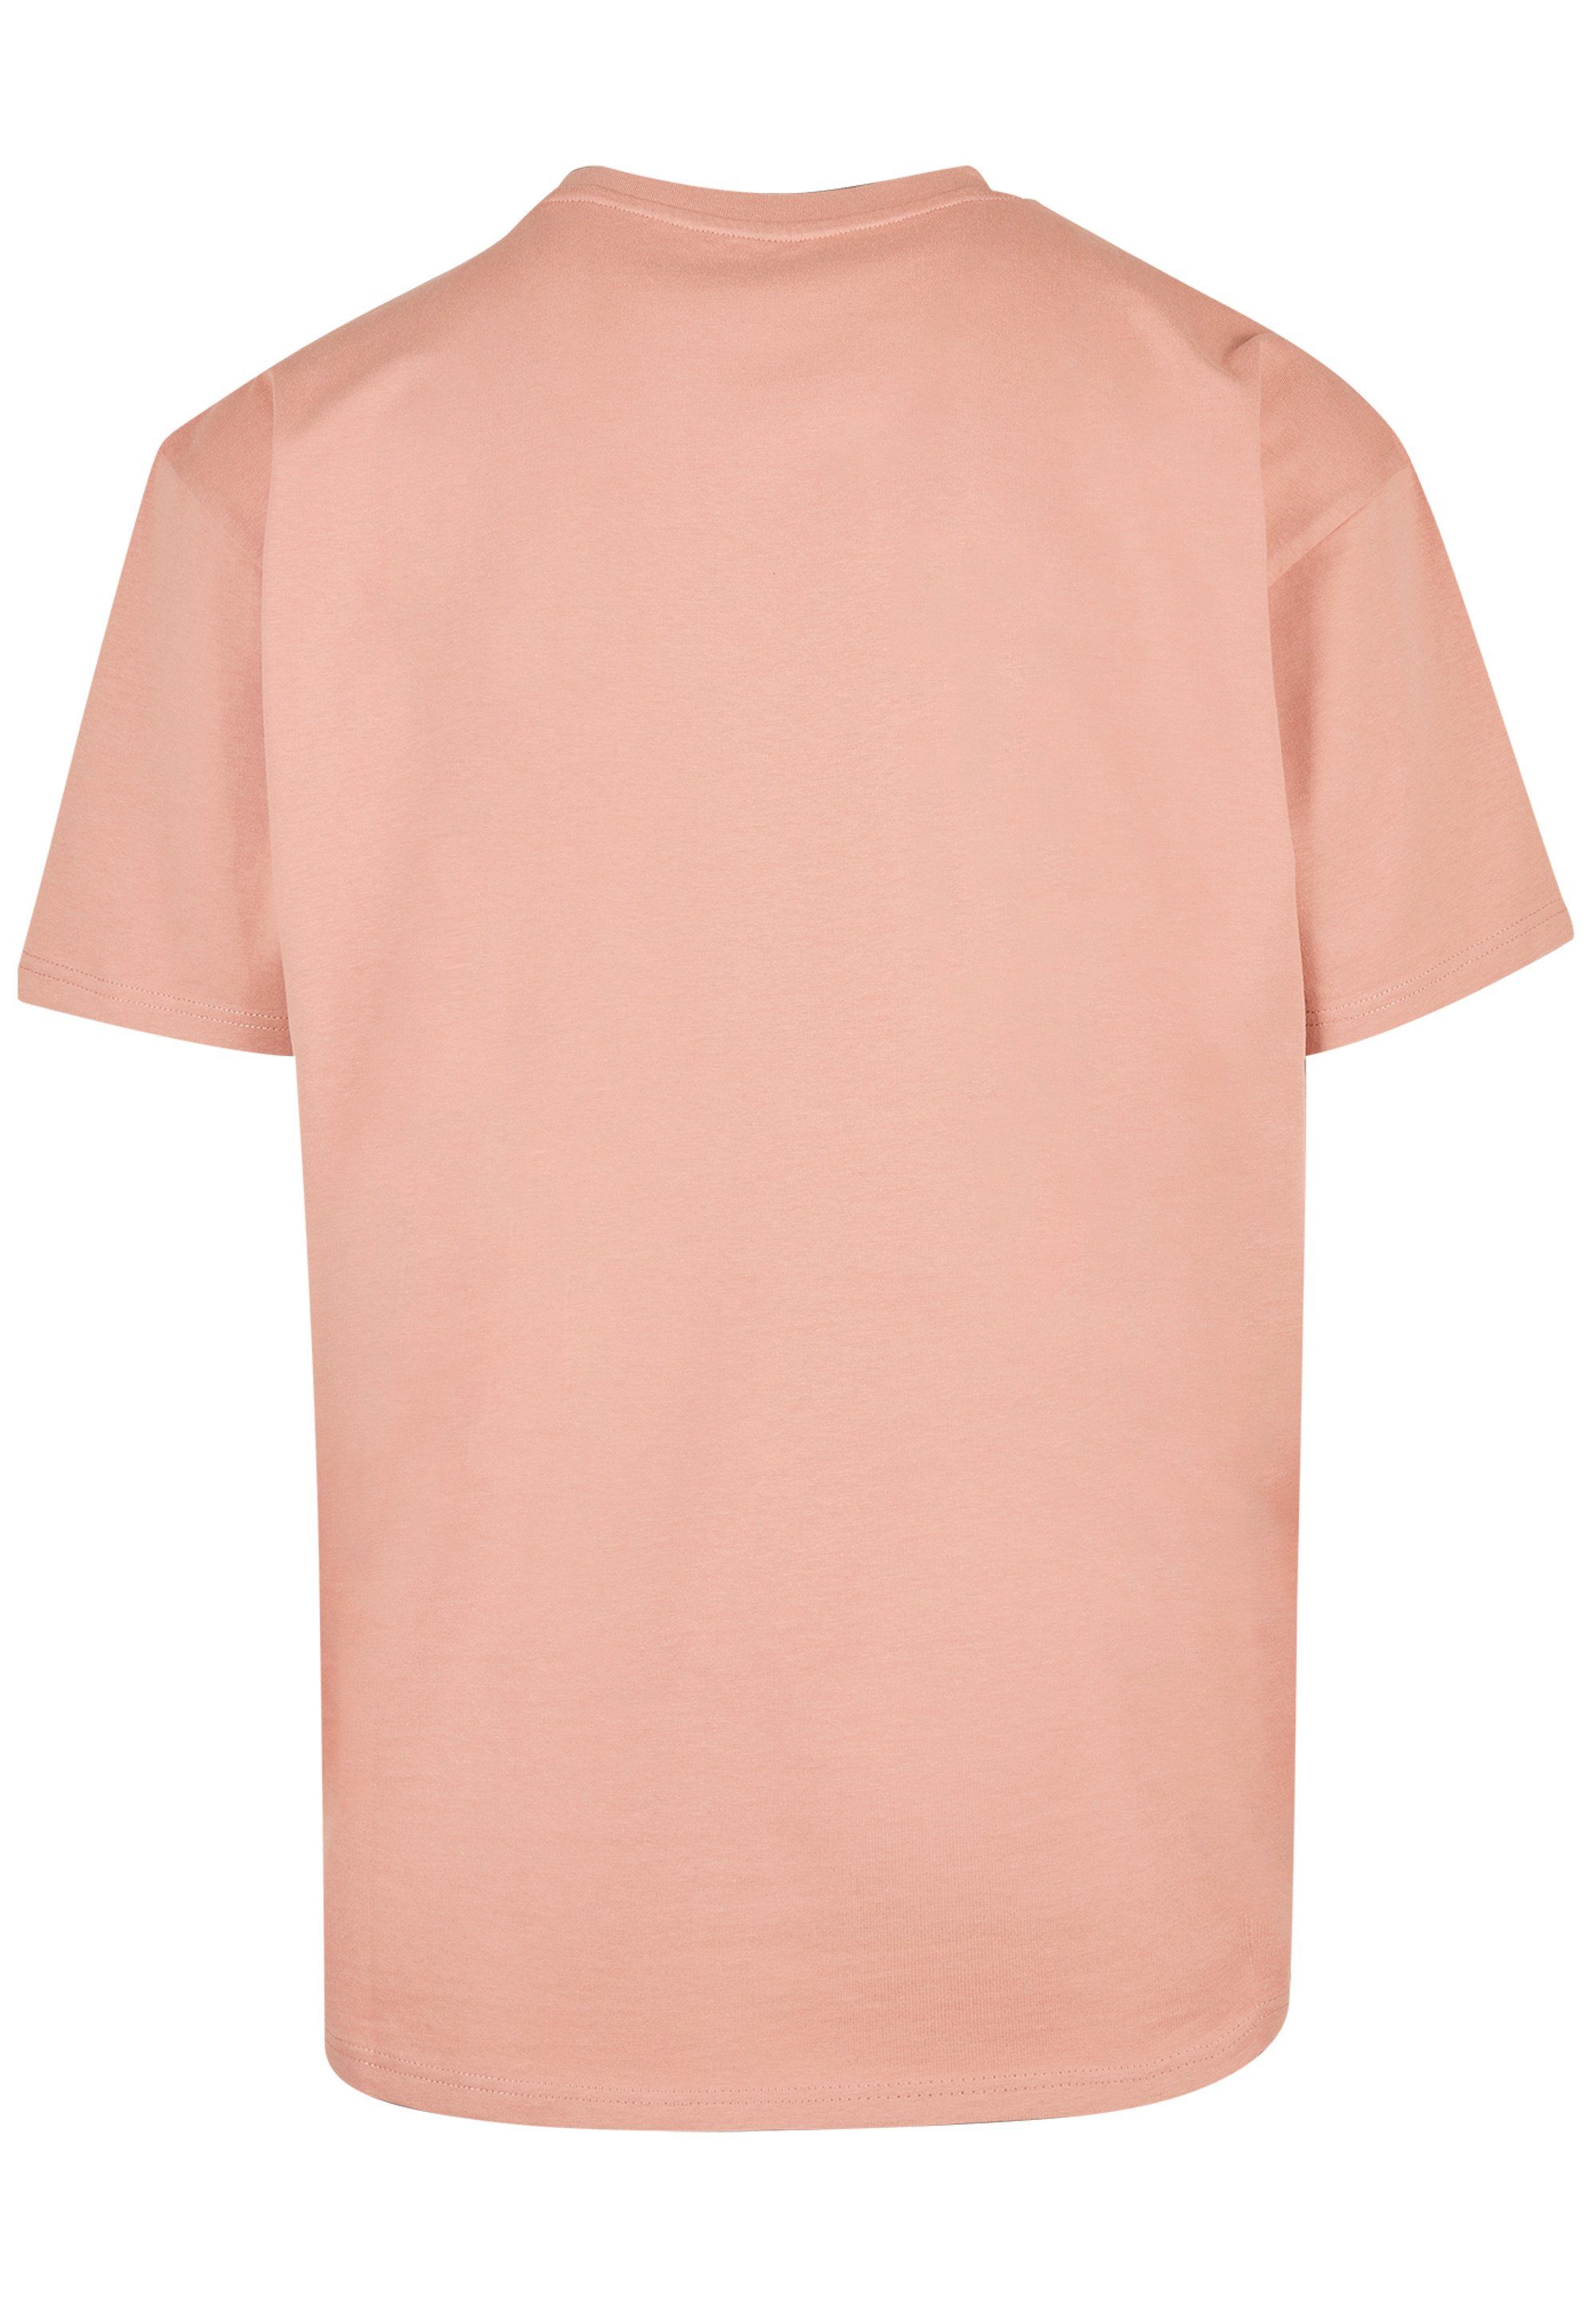 F4NT4STIC T-Shirt Rainbow Turtle Print TEE amber OVERSIZE